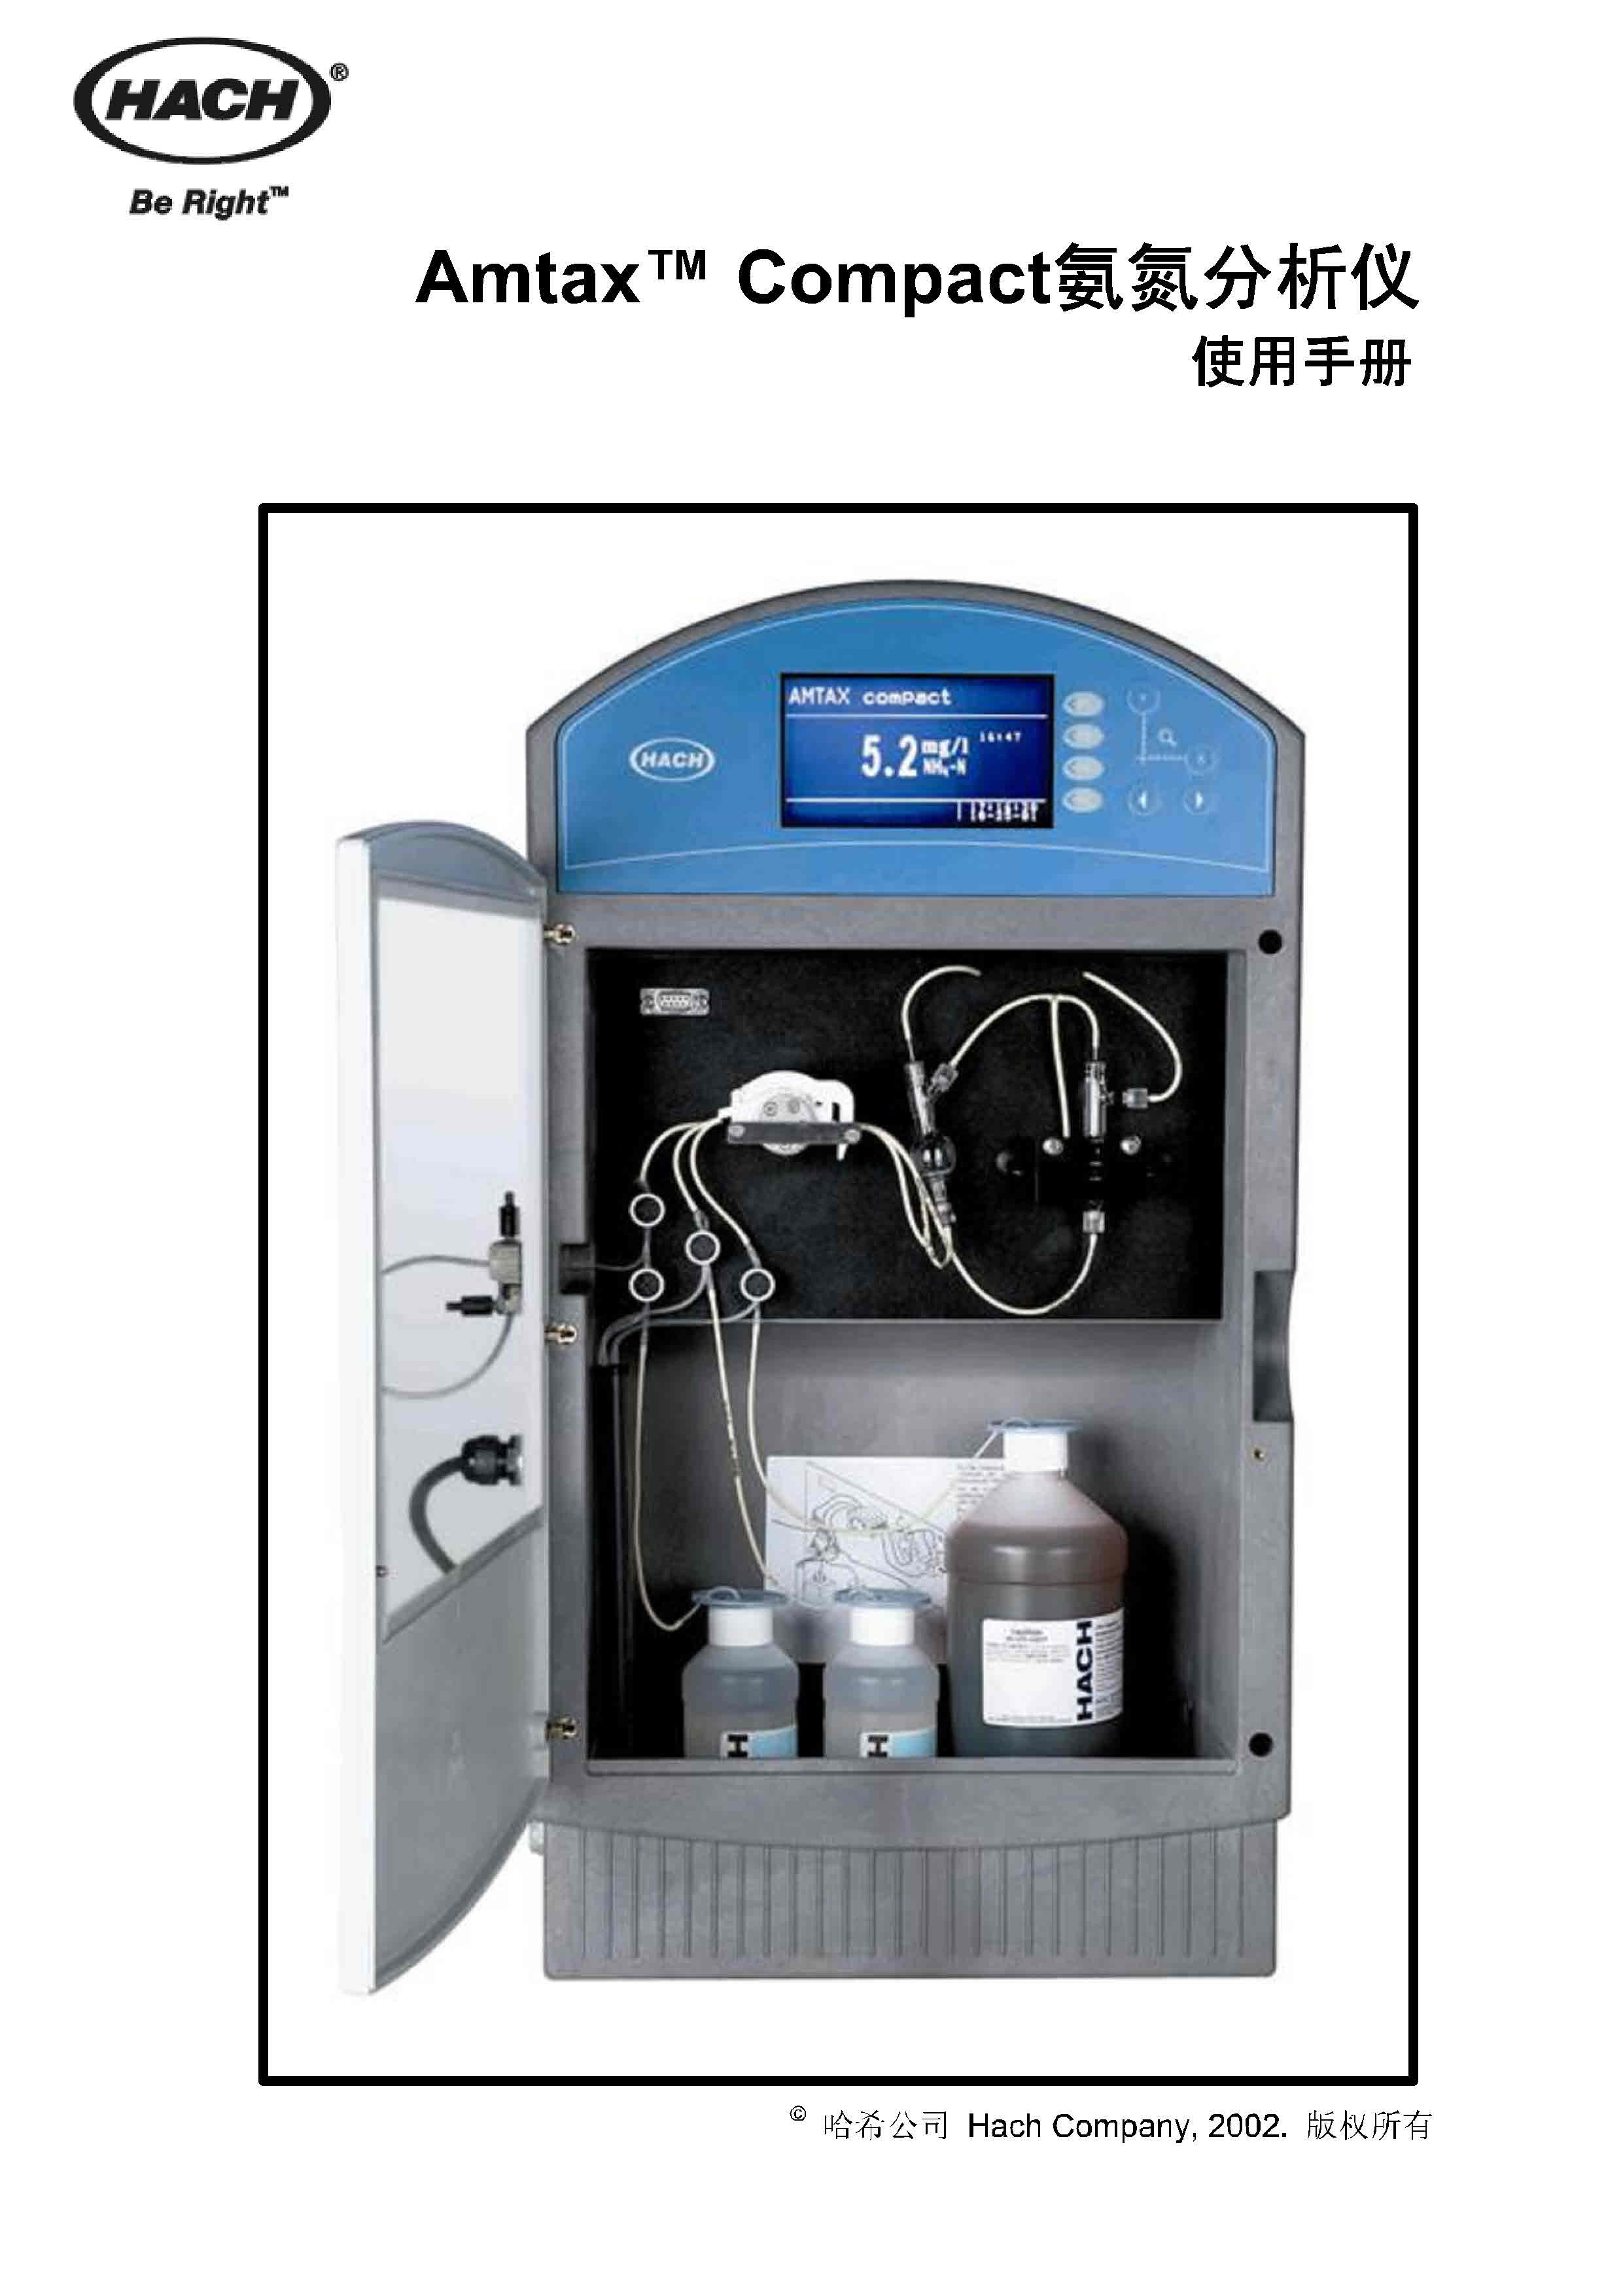 Amtax Compact 氨氮分析仪中文使用说明书